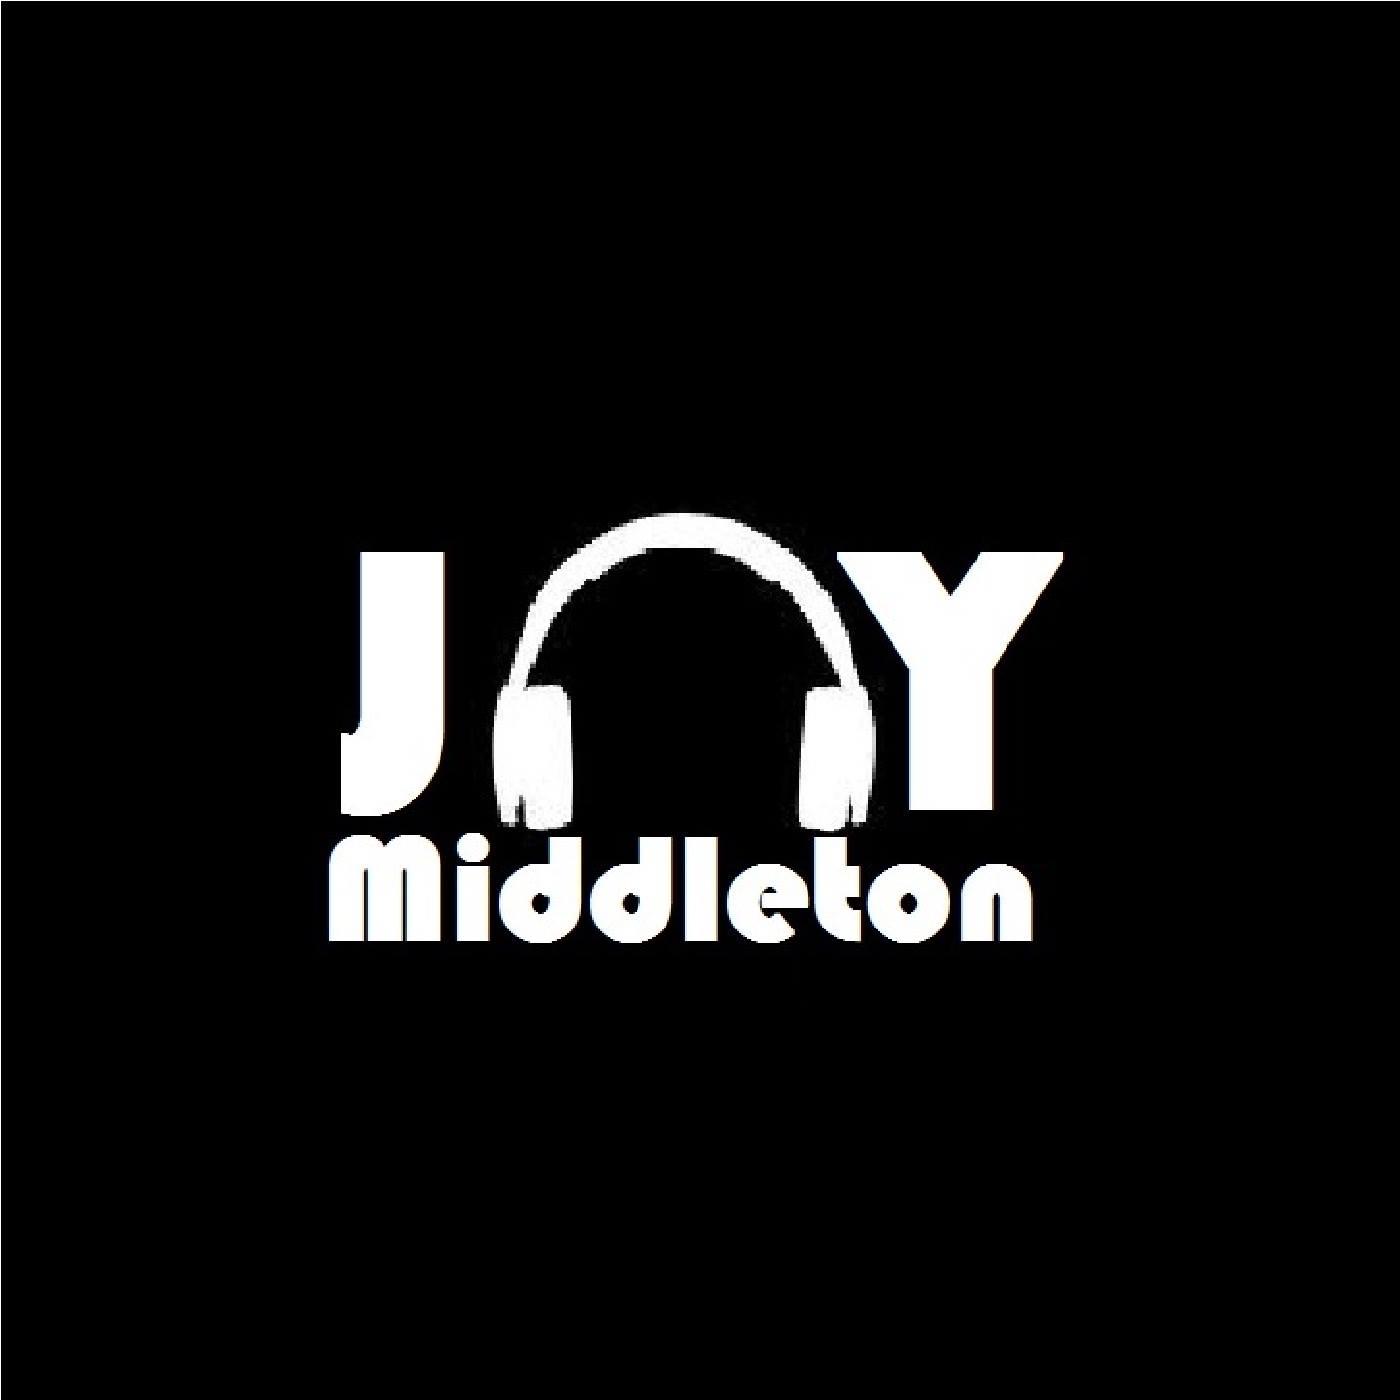 Jay Middleton